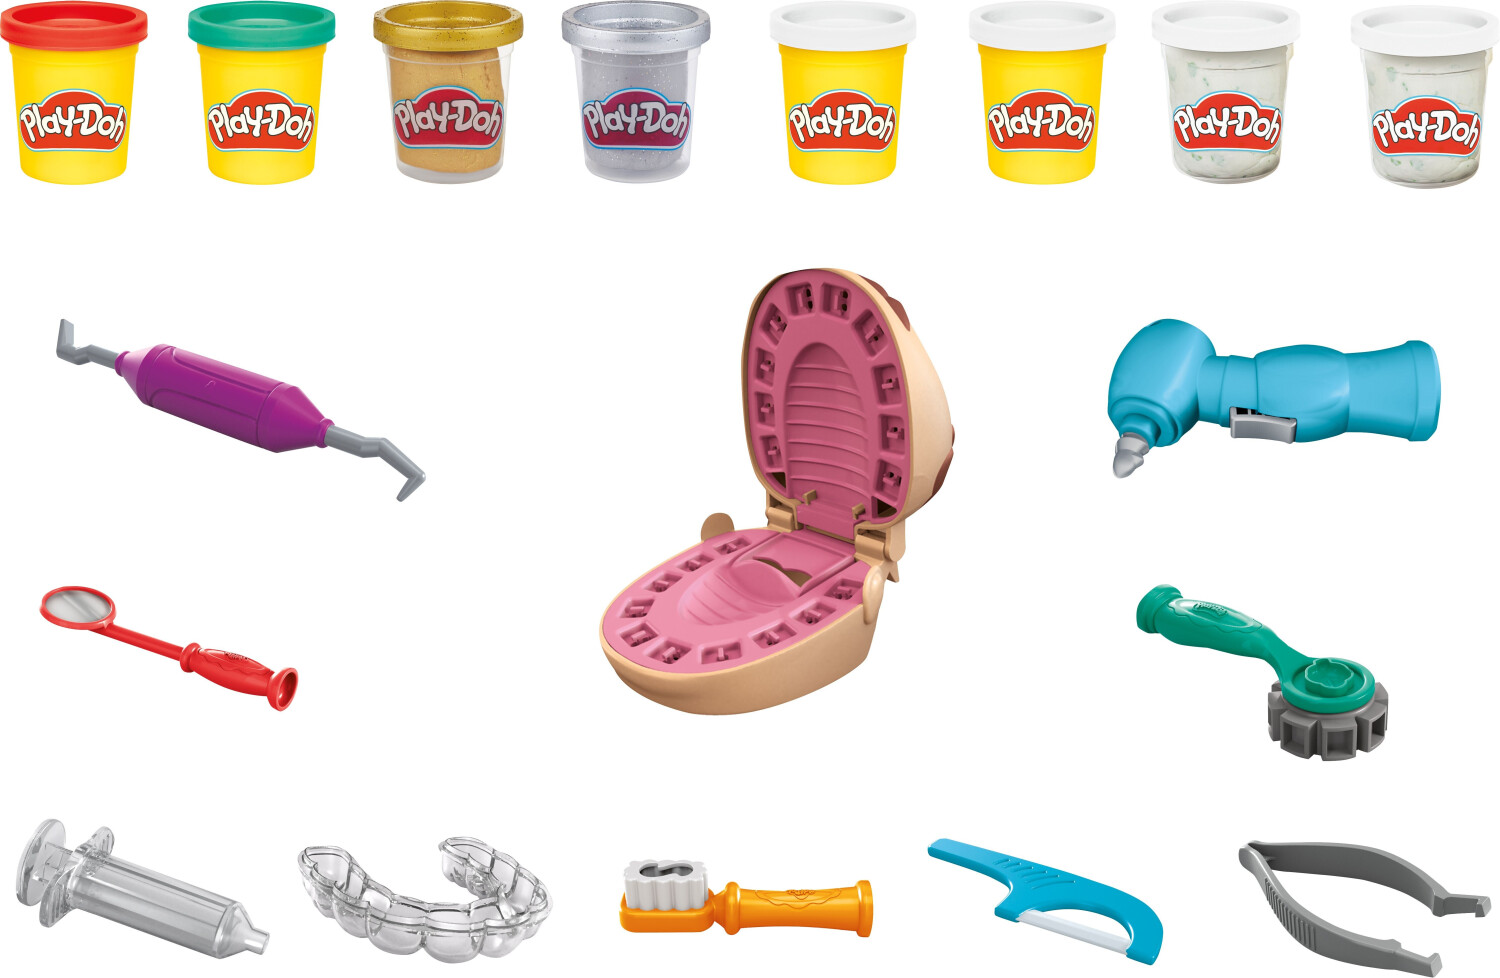 Coffret playdoh Mini dentiste - Play-Doh